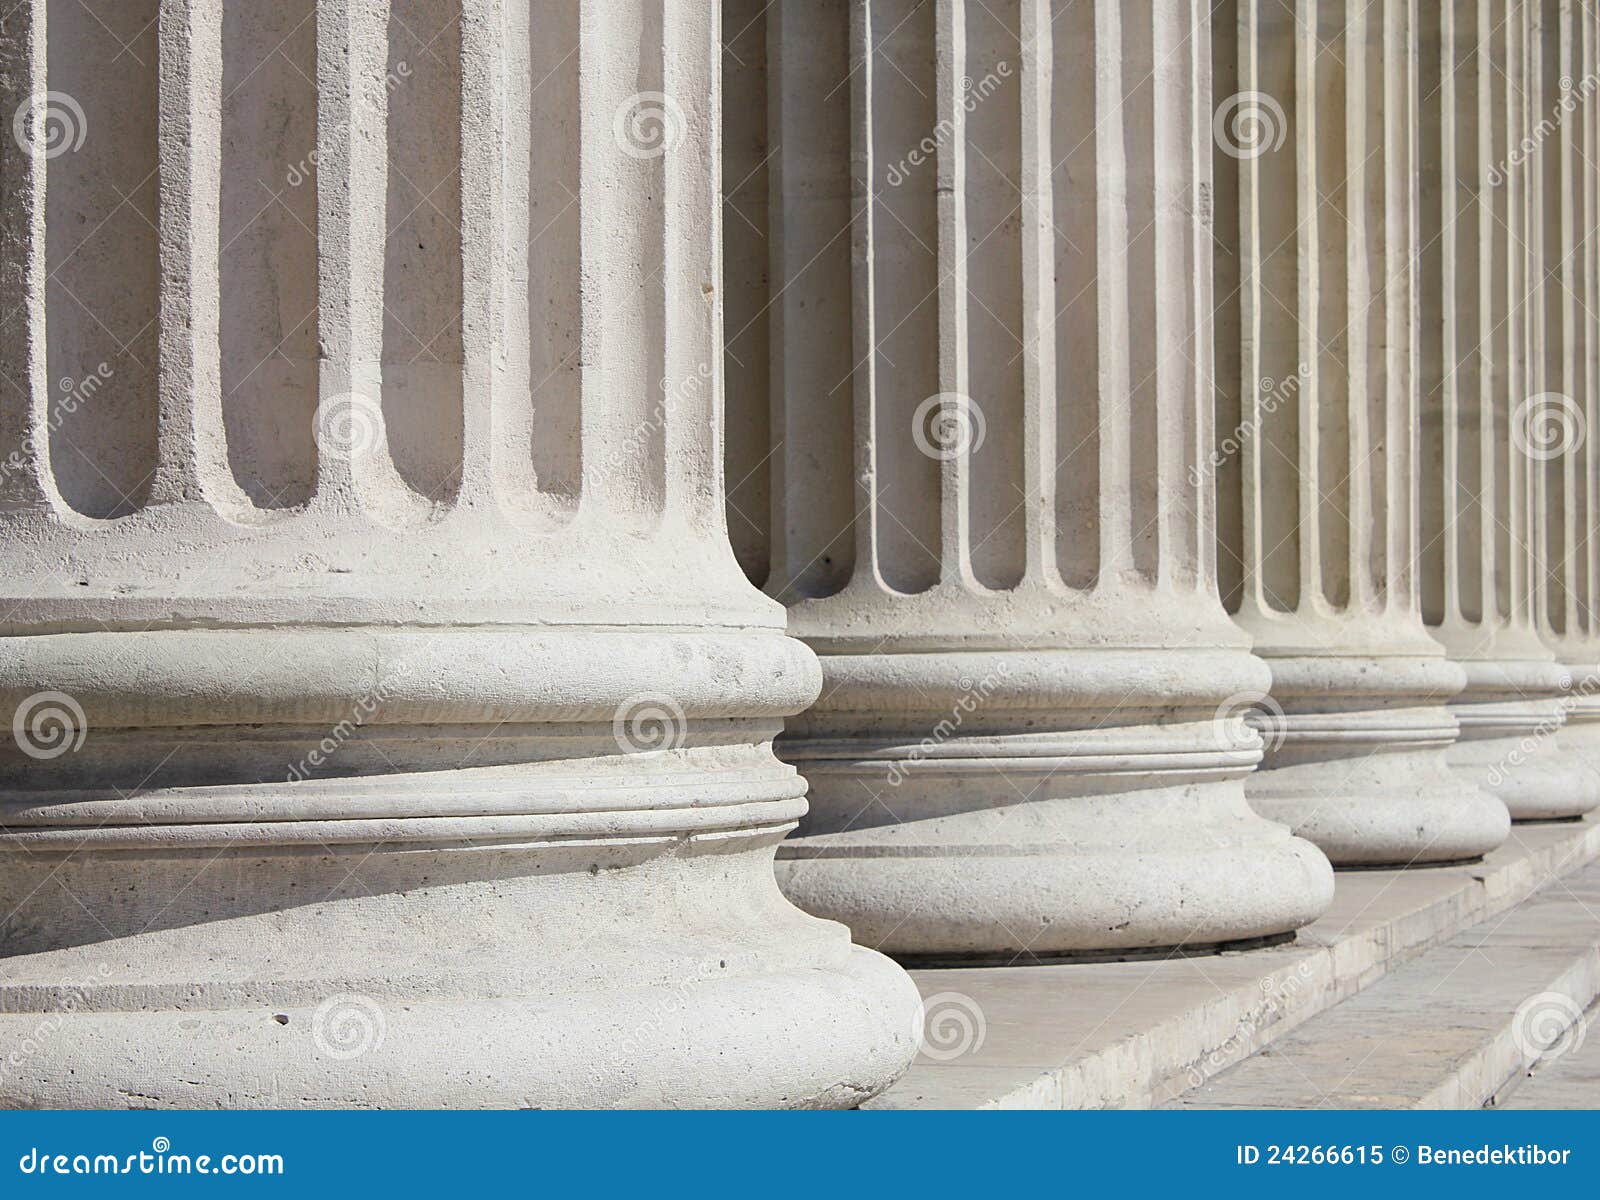 neoclassical columns closeup - business concept